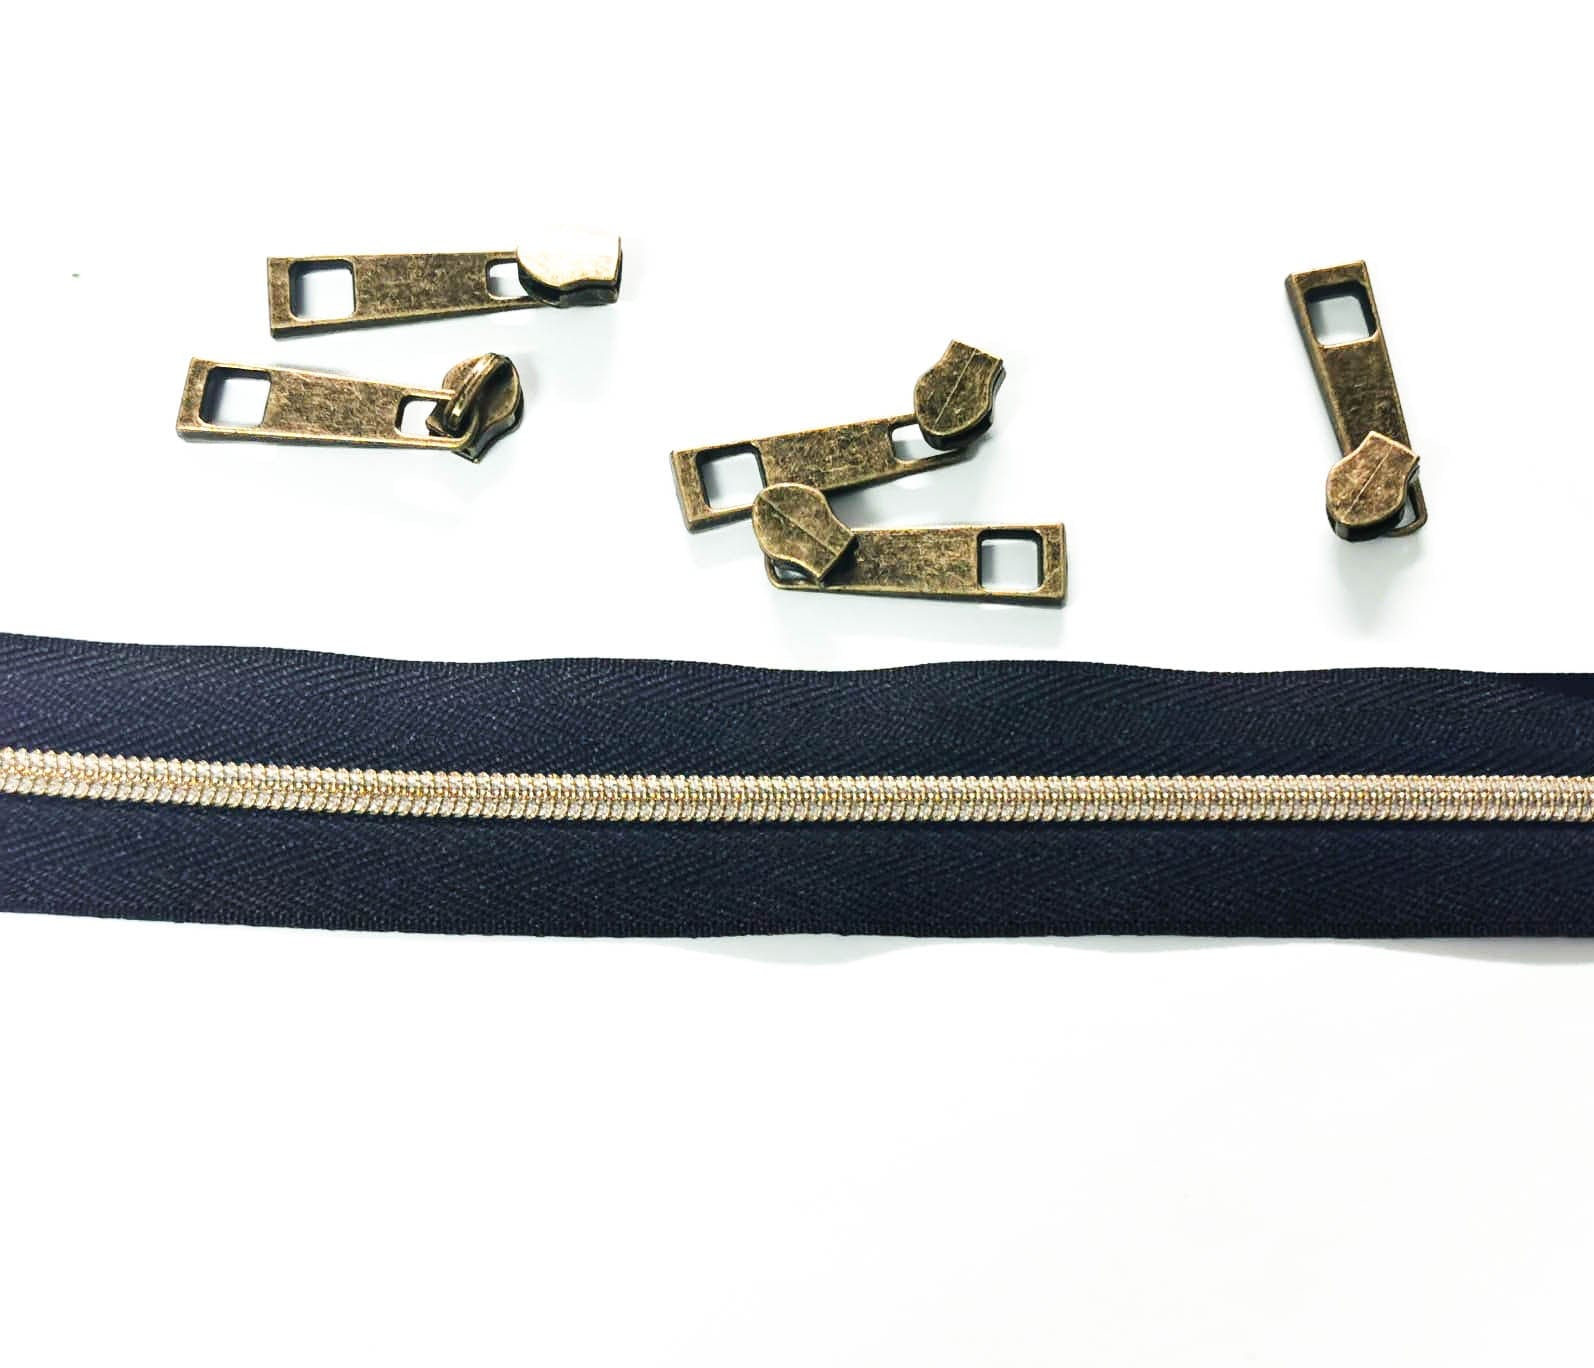 Kiwi Bagineers Zippers Black / Antique Brass Zipper by the Metre. 2.5m of #3 Zipper tape with 10 Zipper Sliders/Pullers